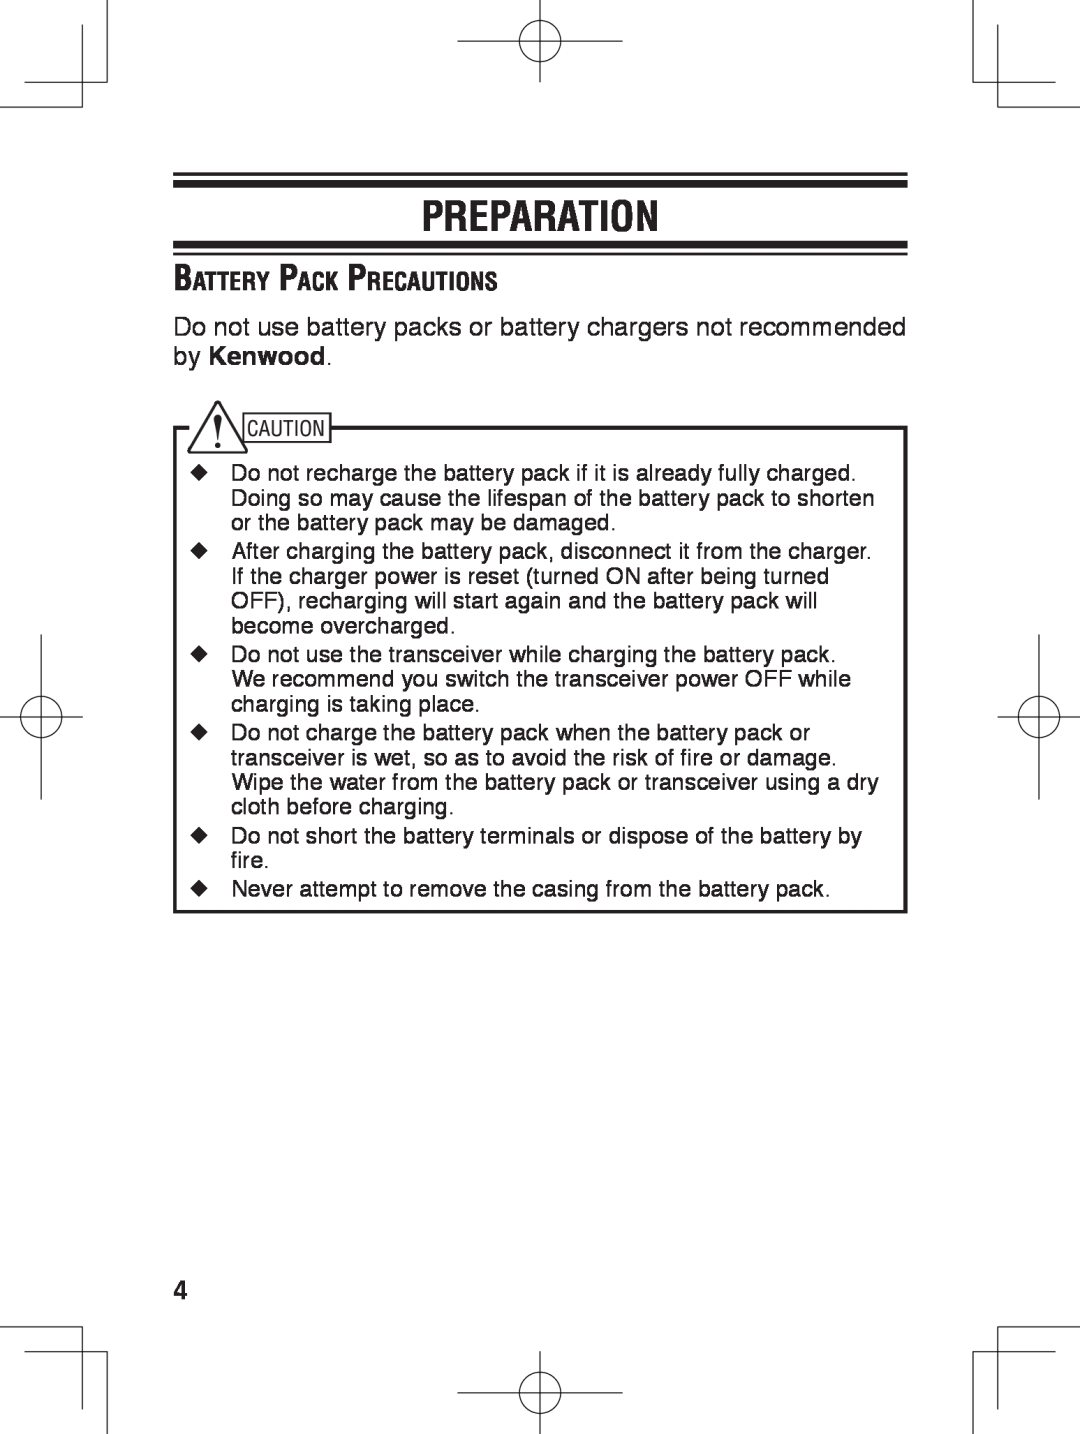 Kenwood TK-3230 instruction manual Preparation, Battery Pack Precautions 